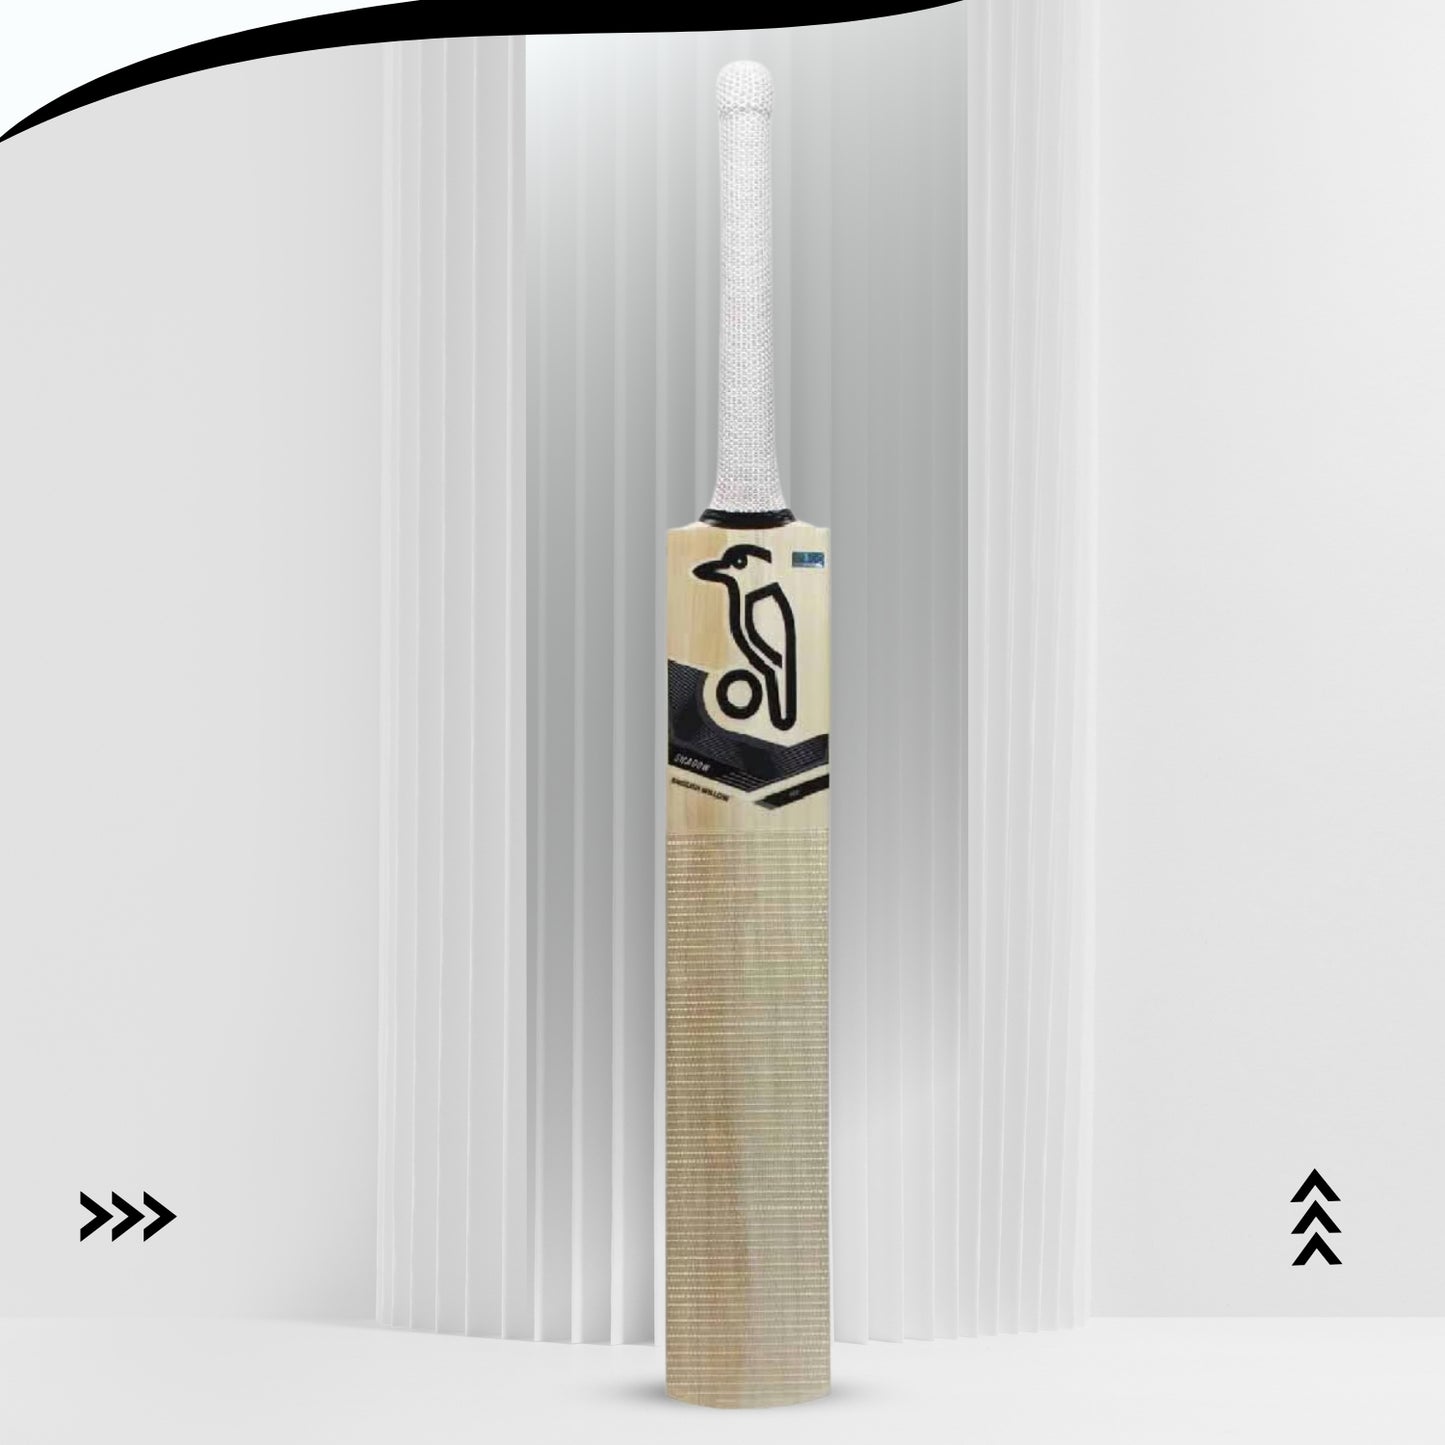 Kookaburra Shadow 100 English Willow Cricket Bat - Best Price online Prokicksports.com